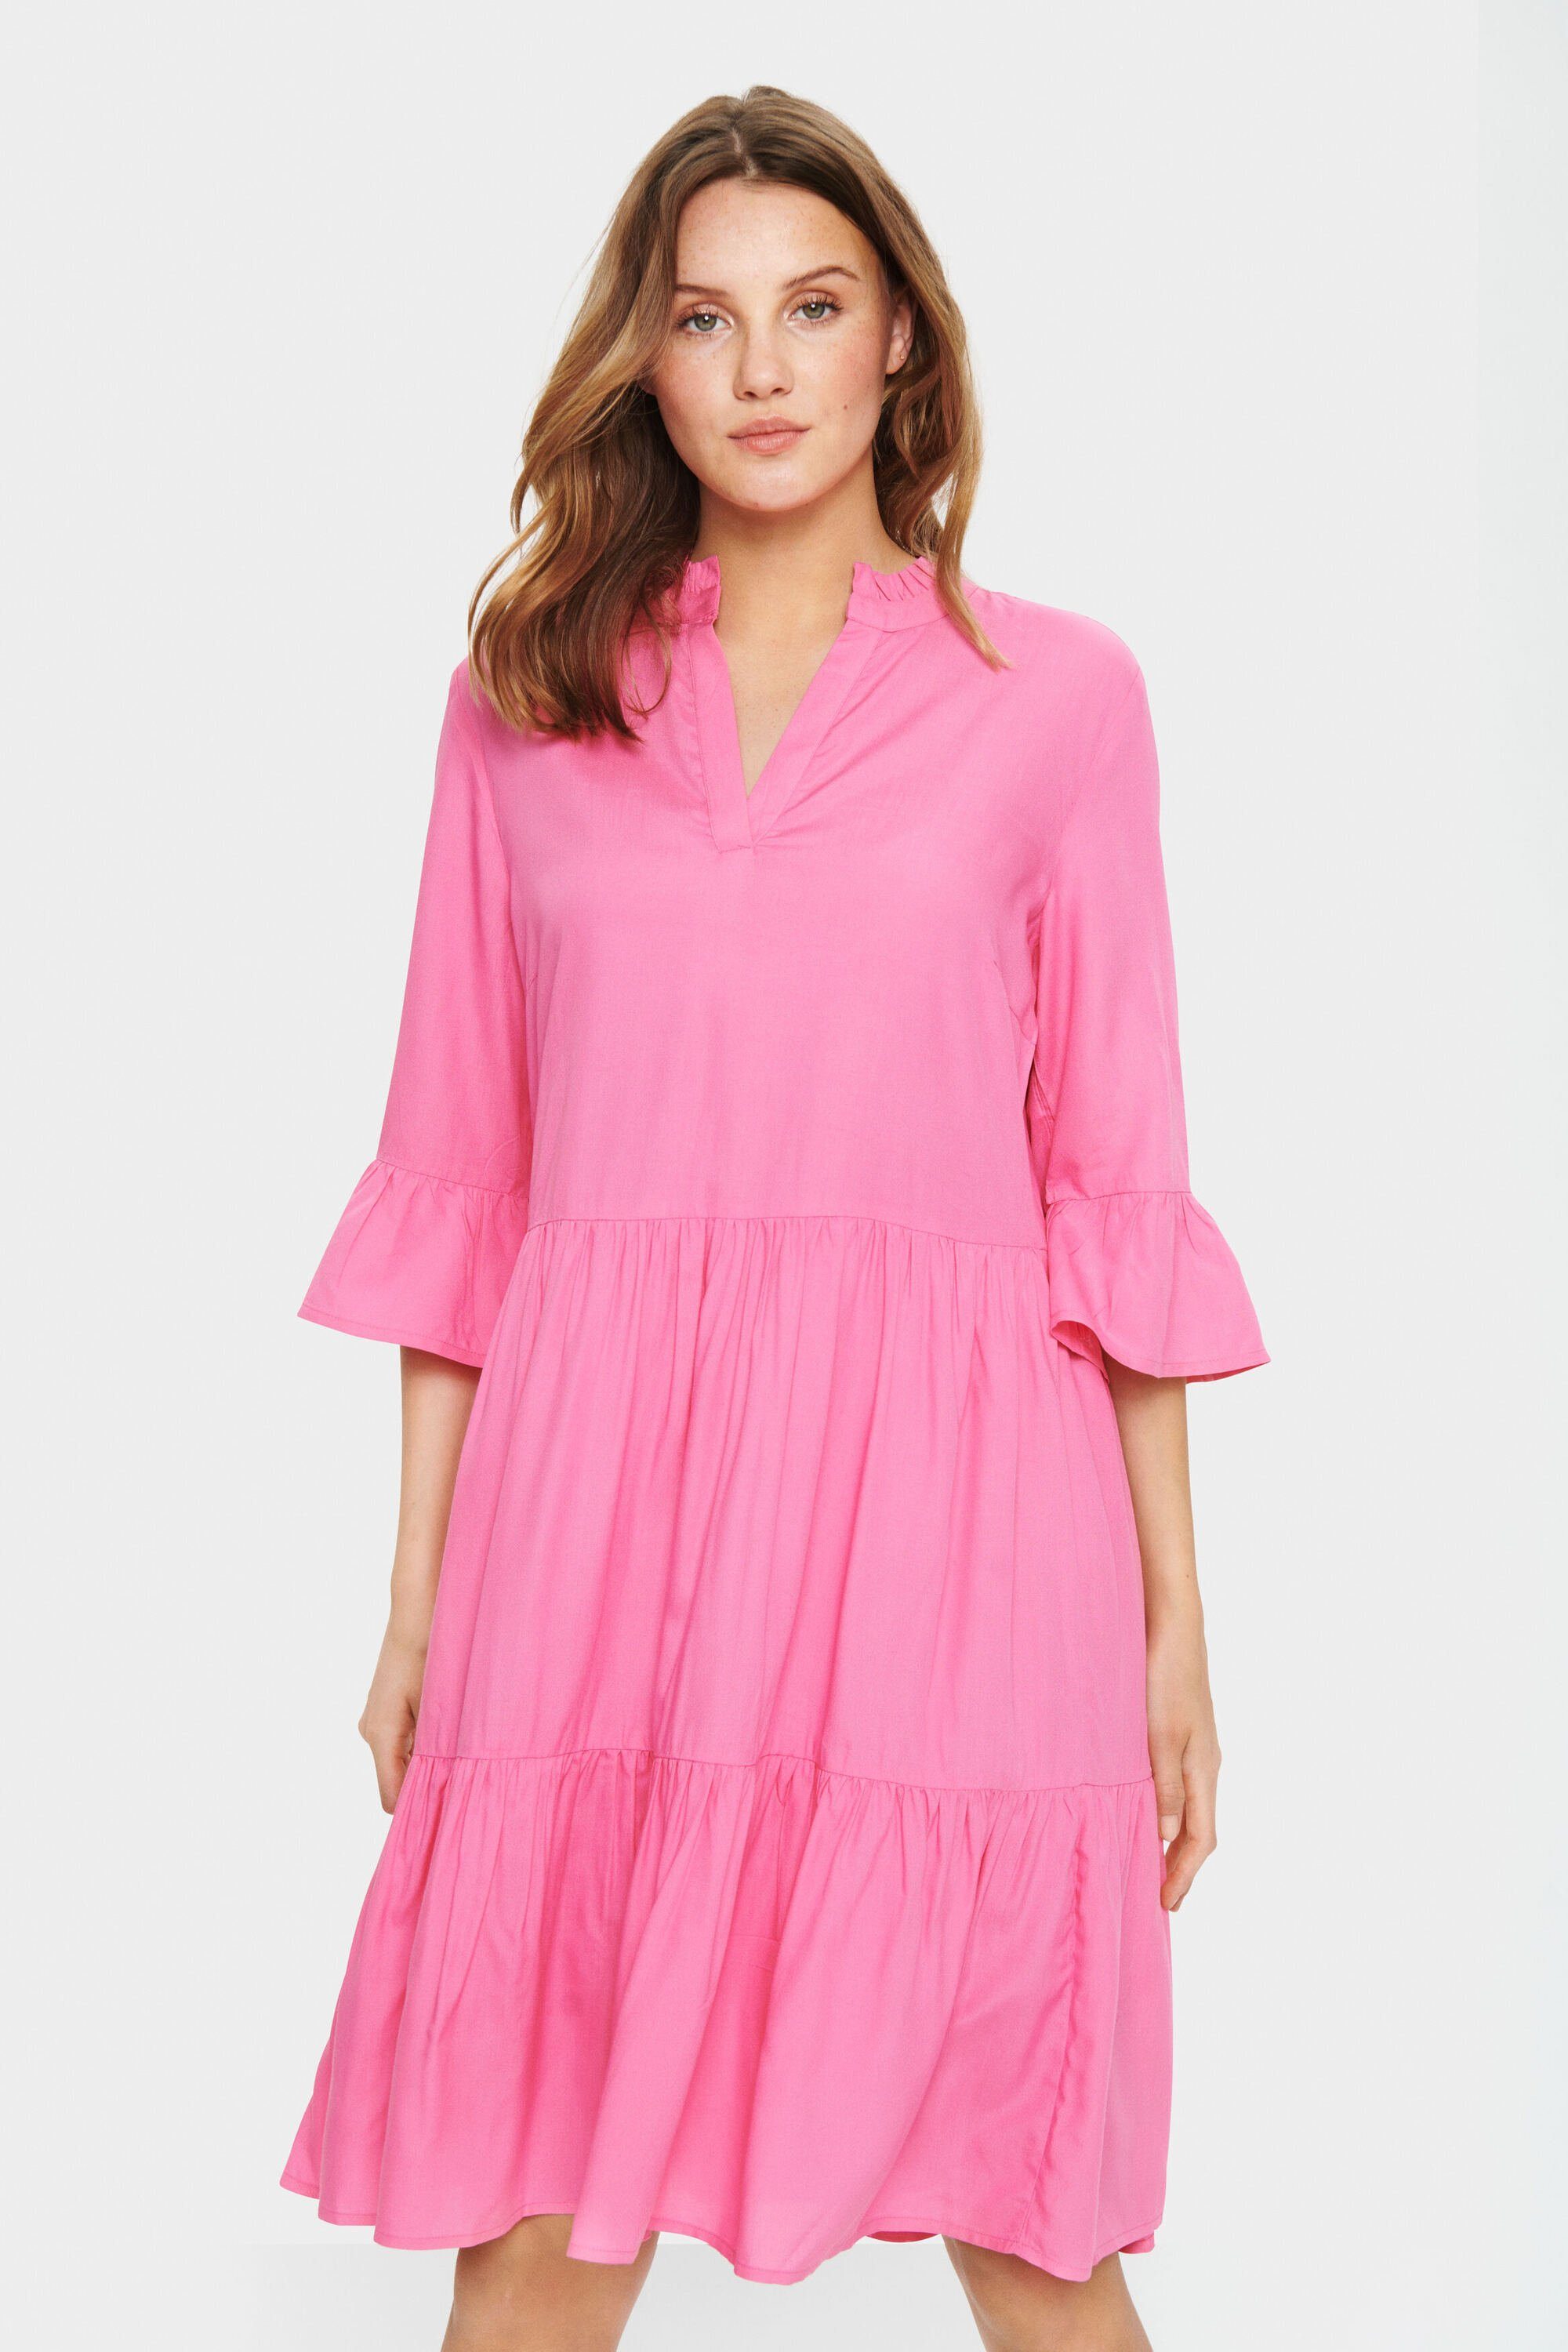 Azalea Pink Jerseykleid Kleid Saint EdaSZ Tropez